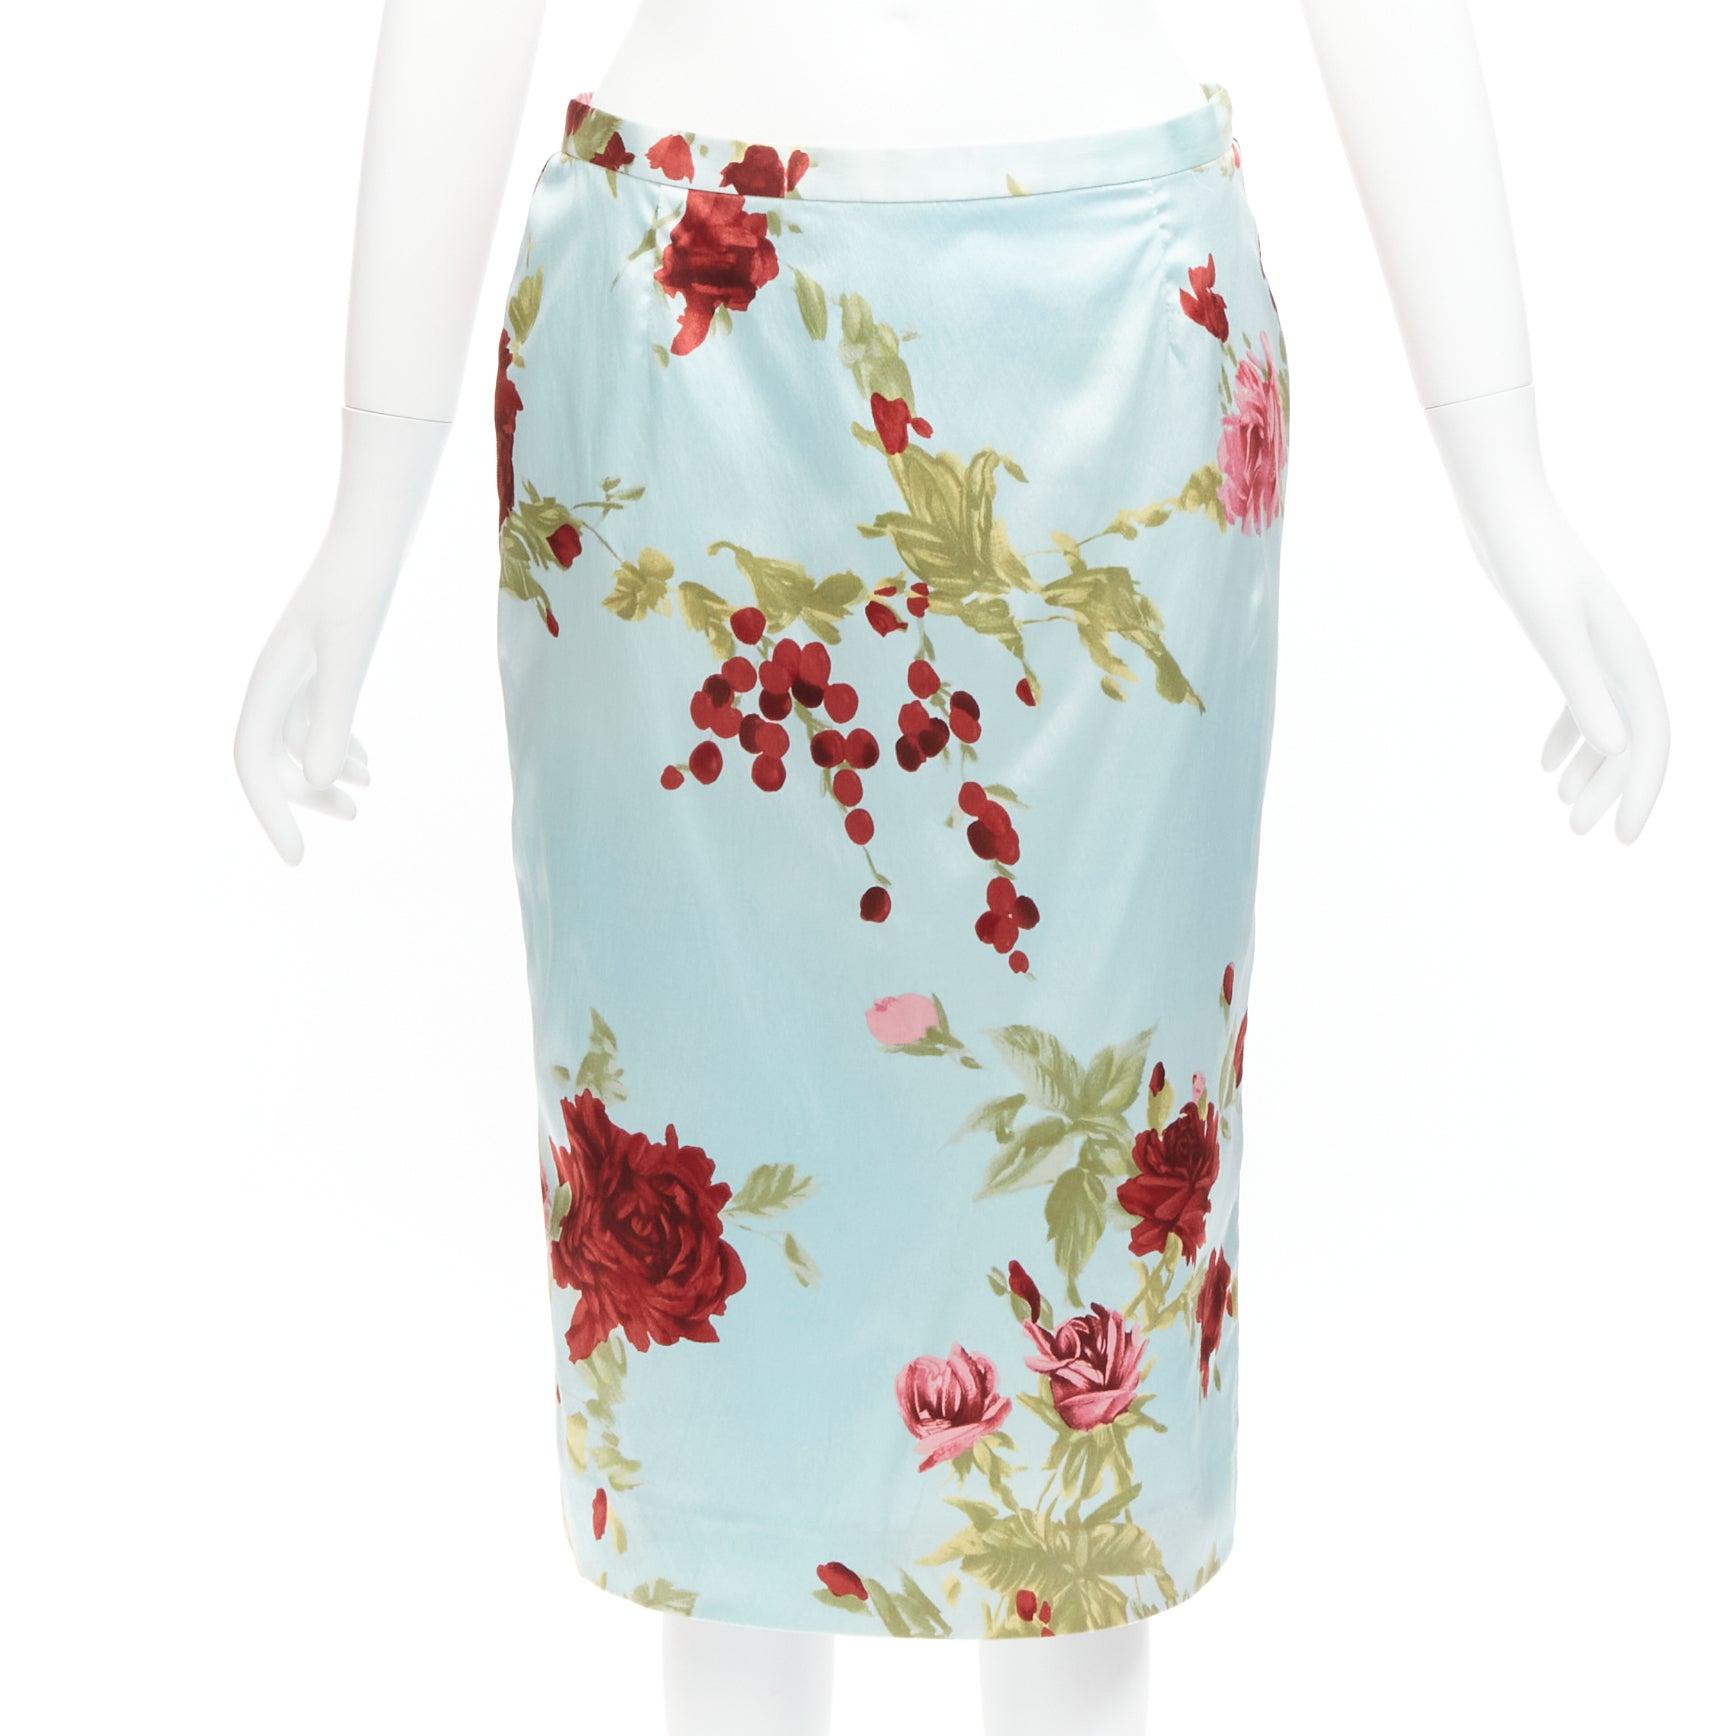 DOLCE GABBANA Vintage floral silk camisole top skirt set IT44 L Carrie Bradshaw For Sale 3